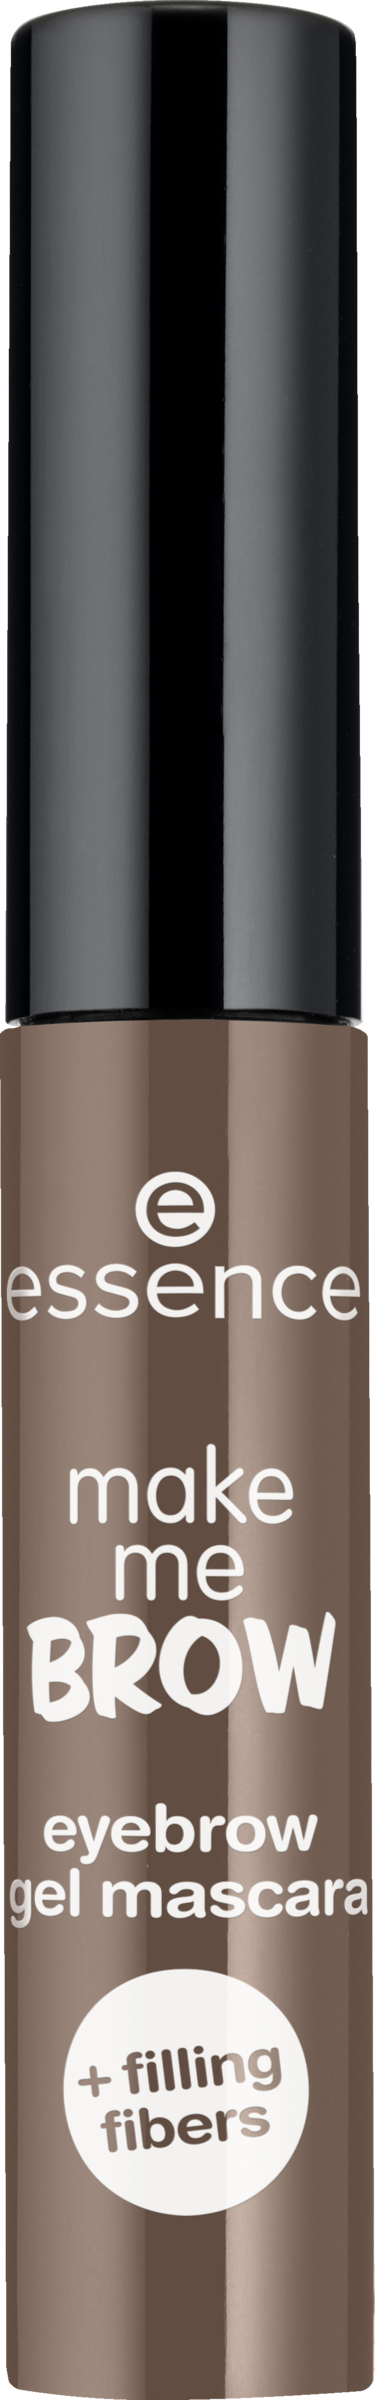 essence make me BROW eyebrow gel mascara 02